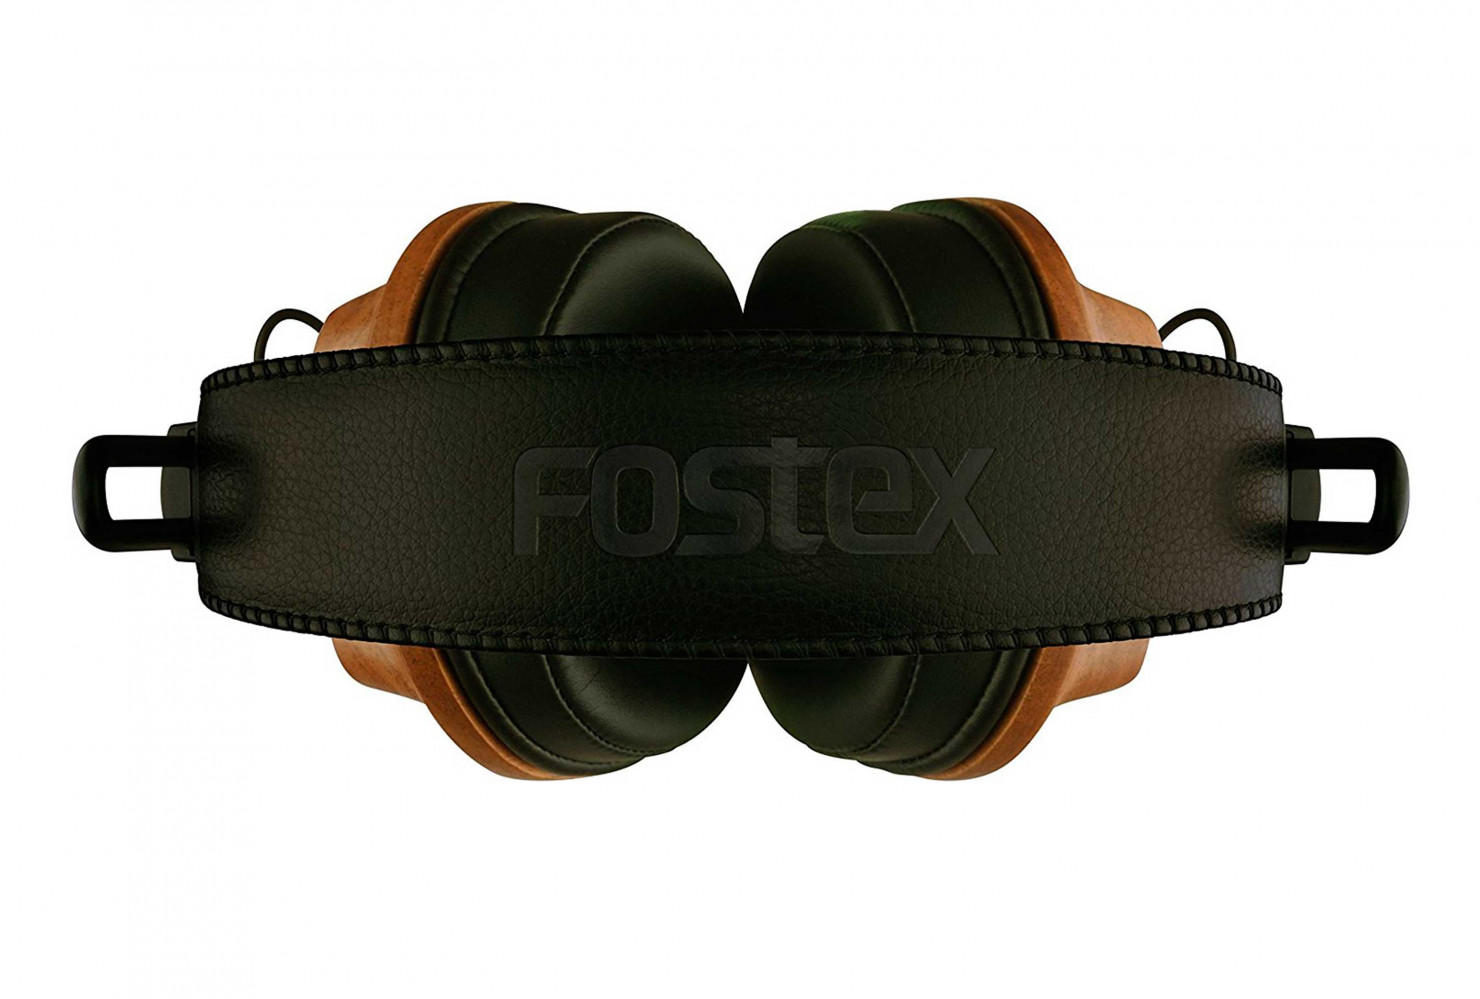 Fostex T60RP Stereo Headphones